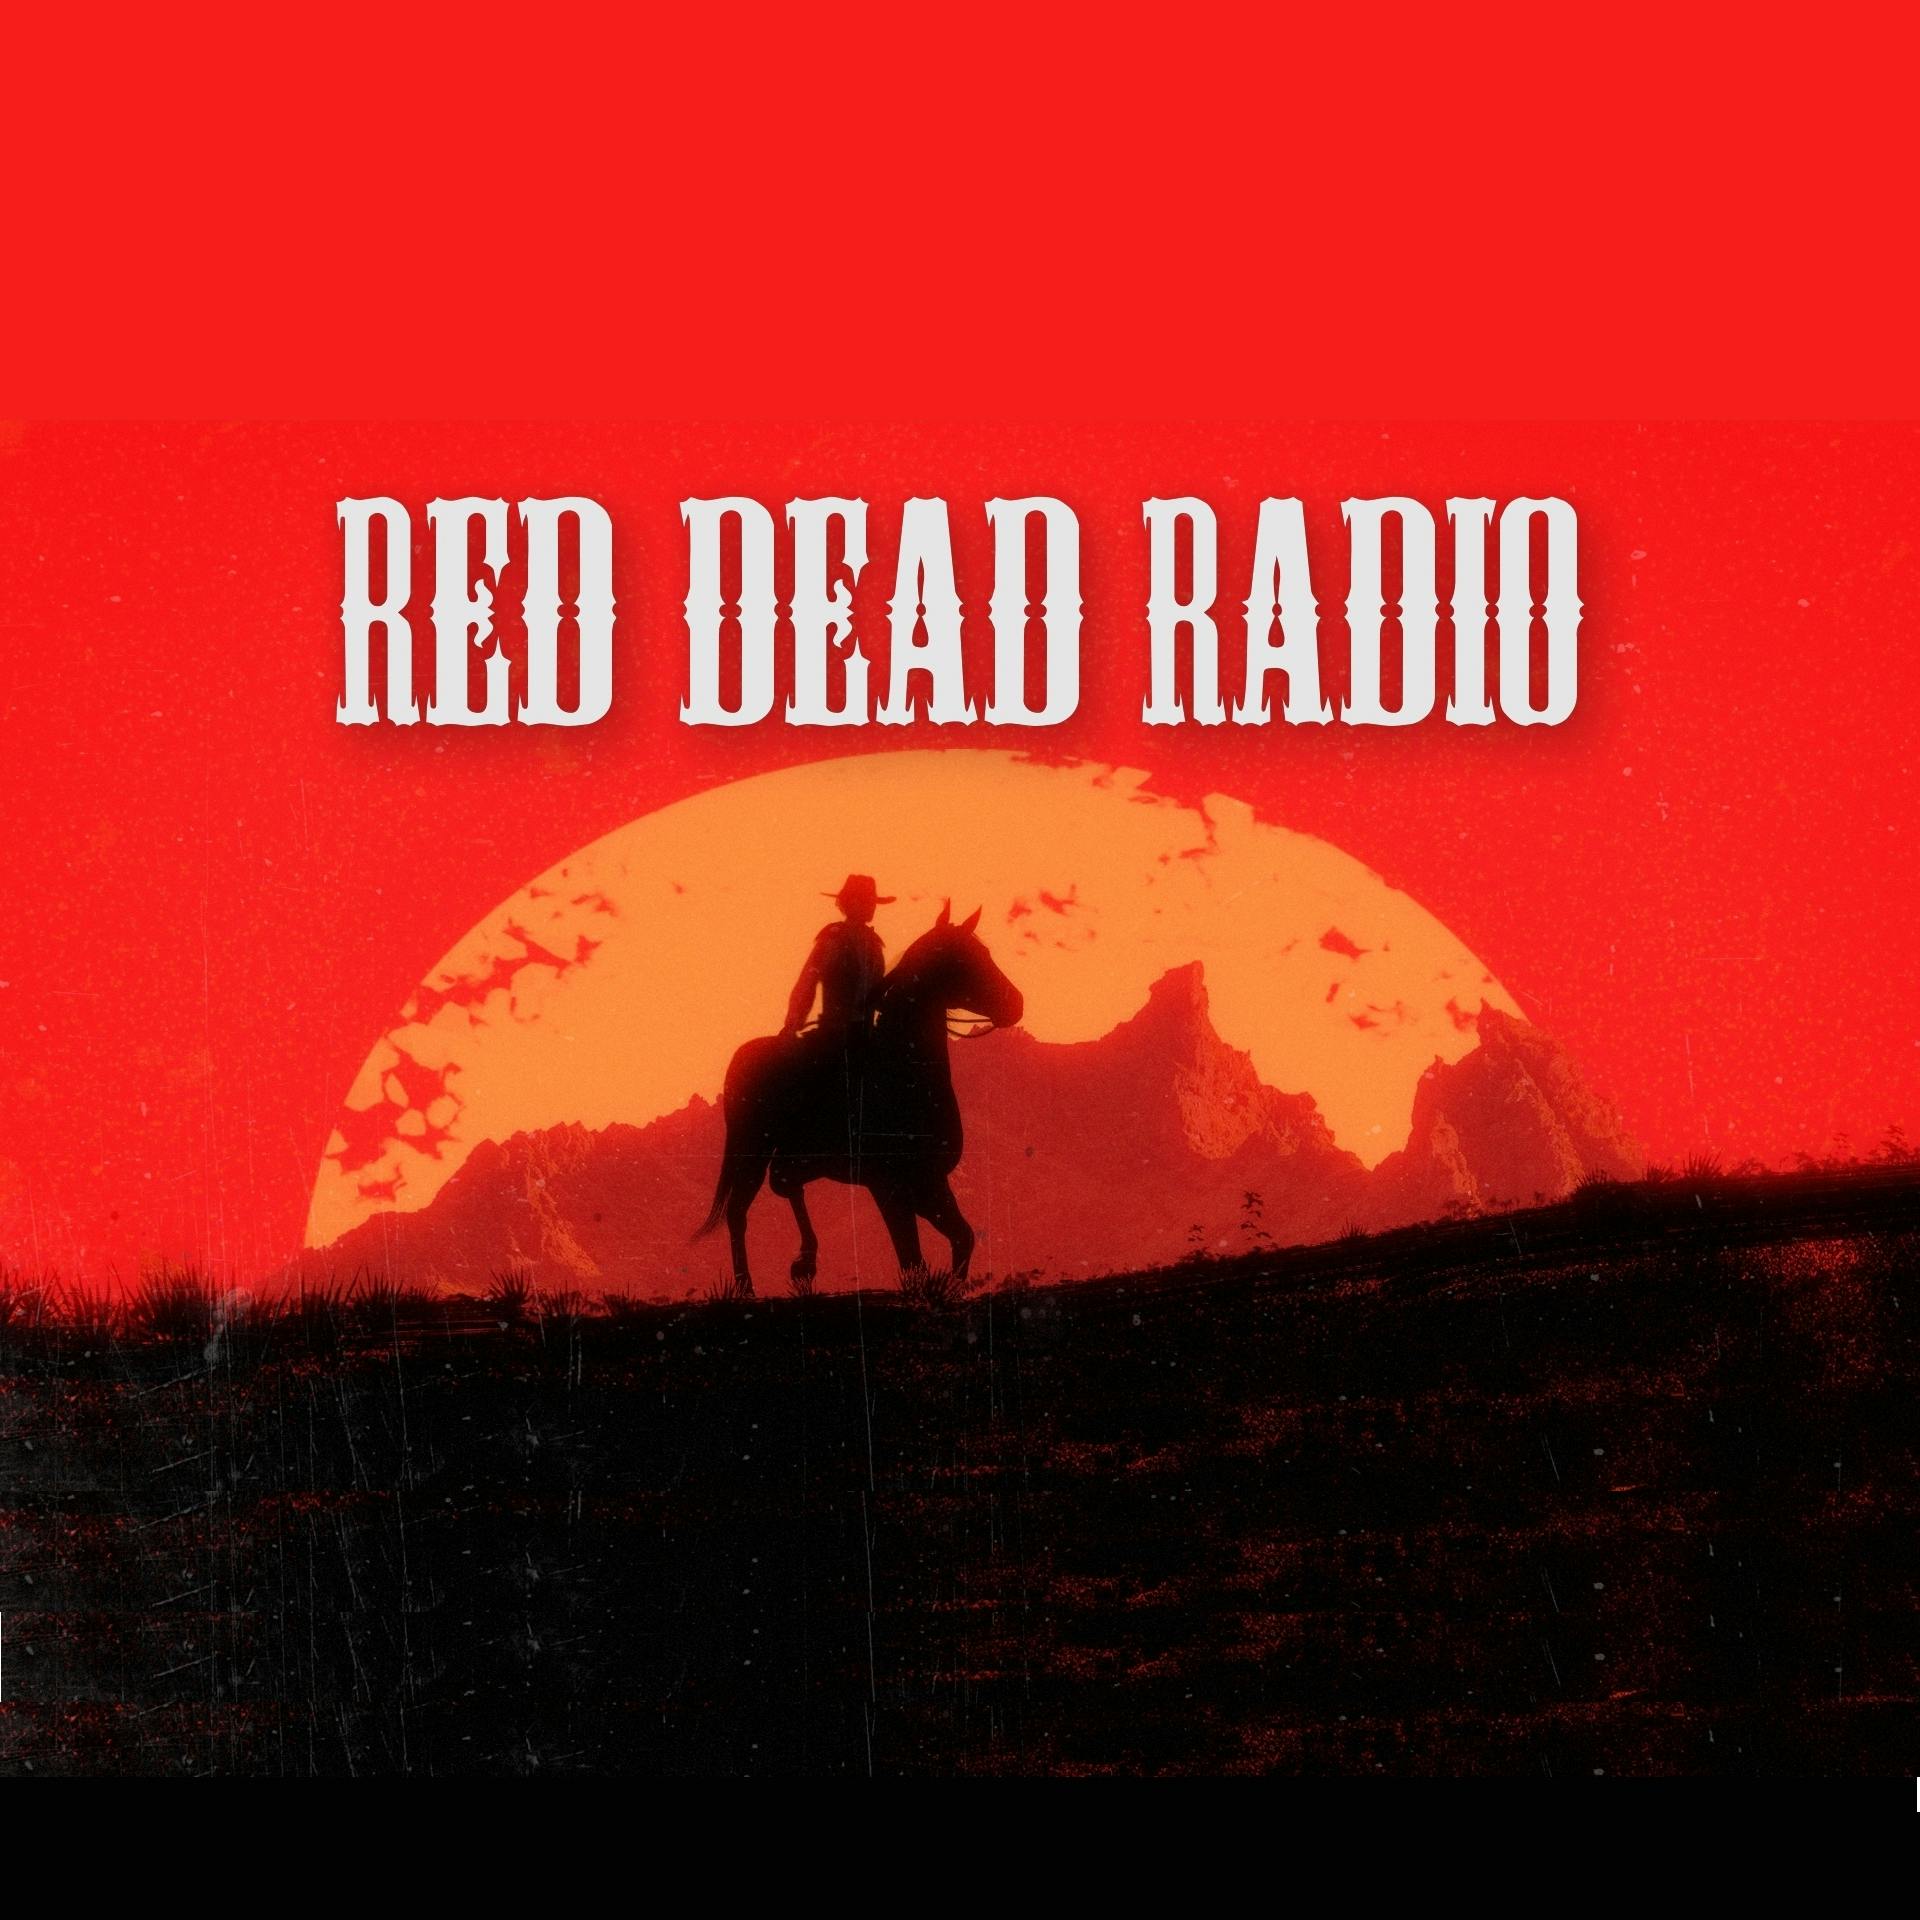 The Ballad of Sadie Adler (Spoilers) - Red Dead Radio Ep. 37